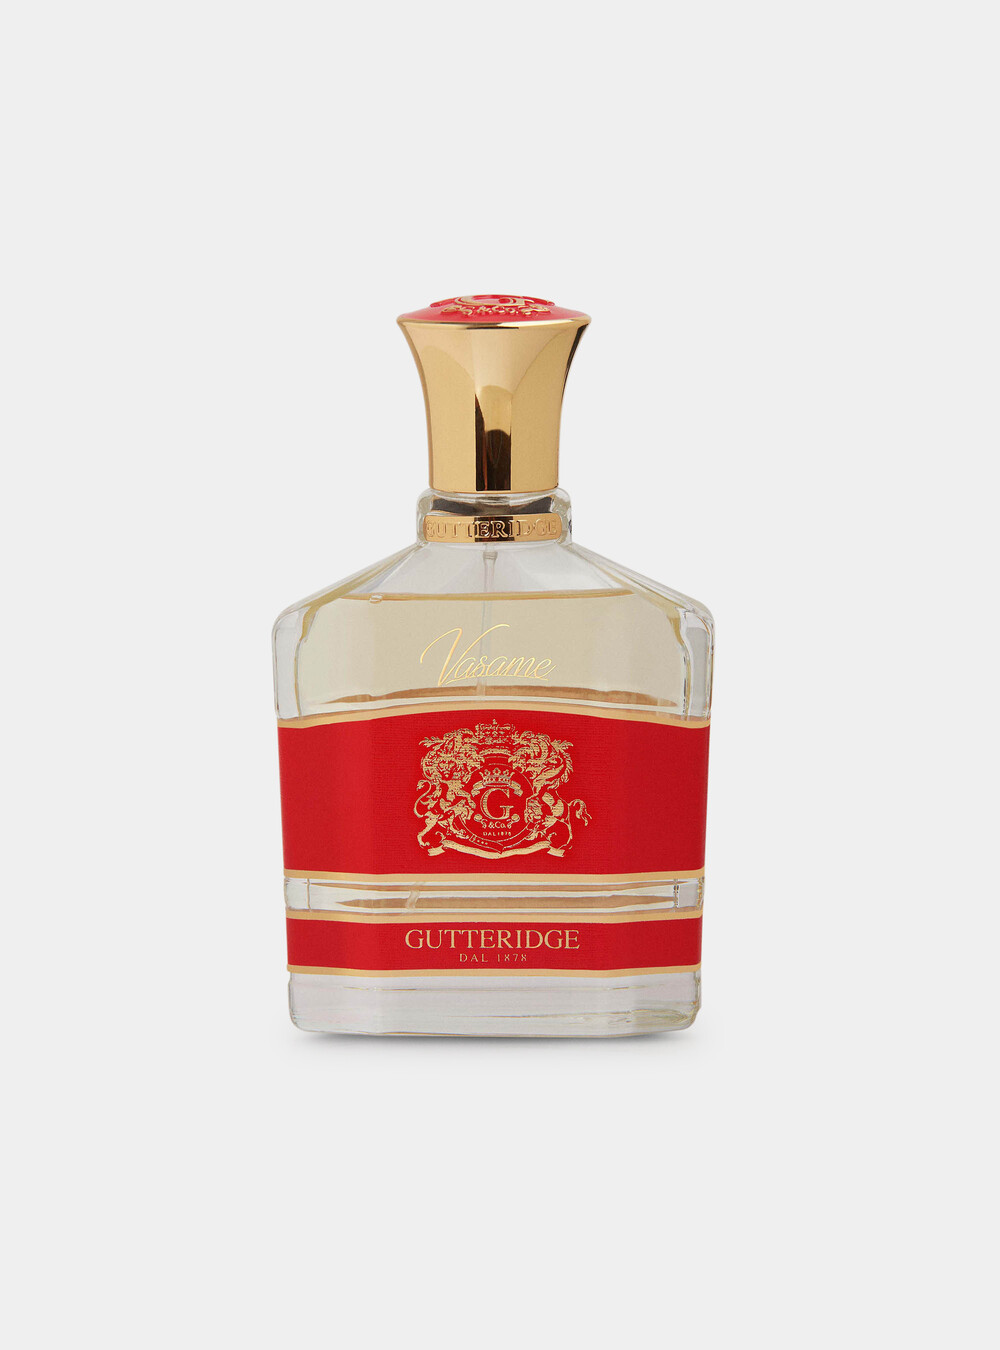 Perfume Gutteridge fragrancia Vasame 100ml | GutteridgeEU | Perfumes y  Cuidado Uomo